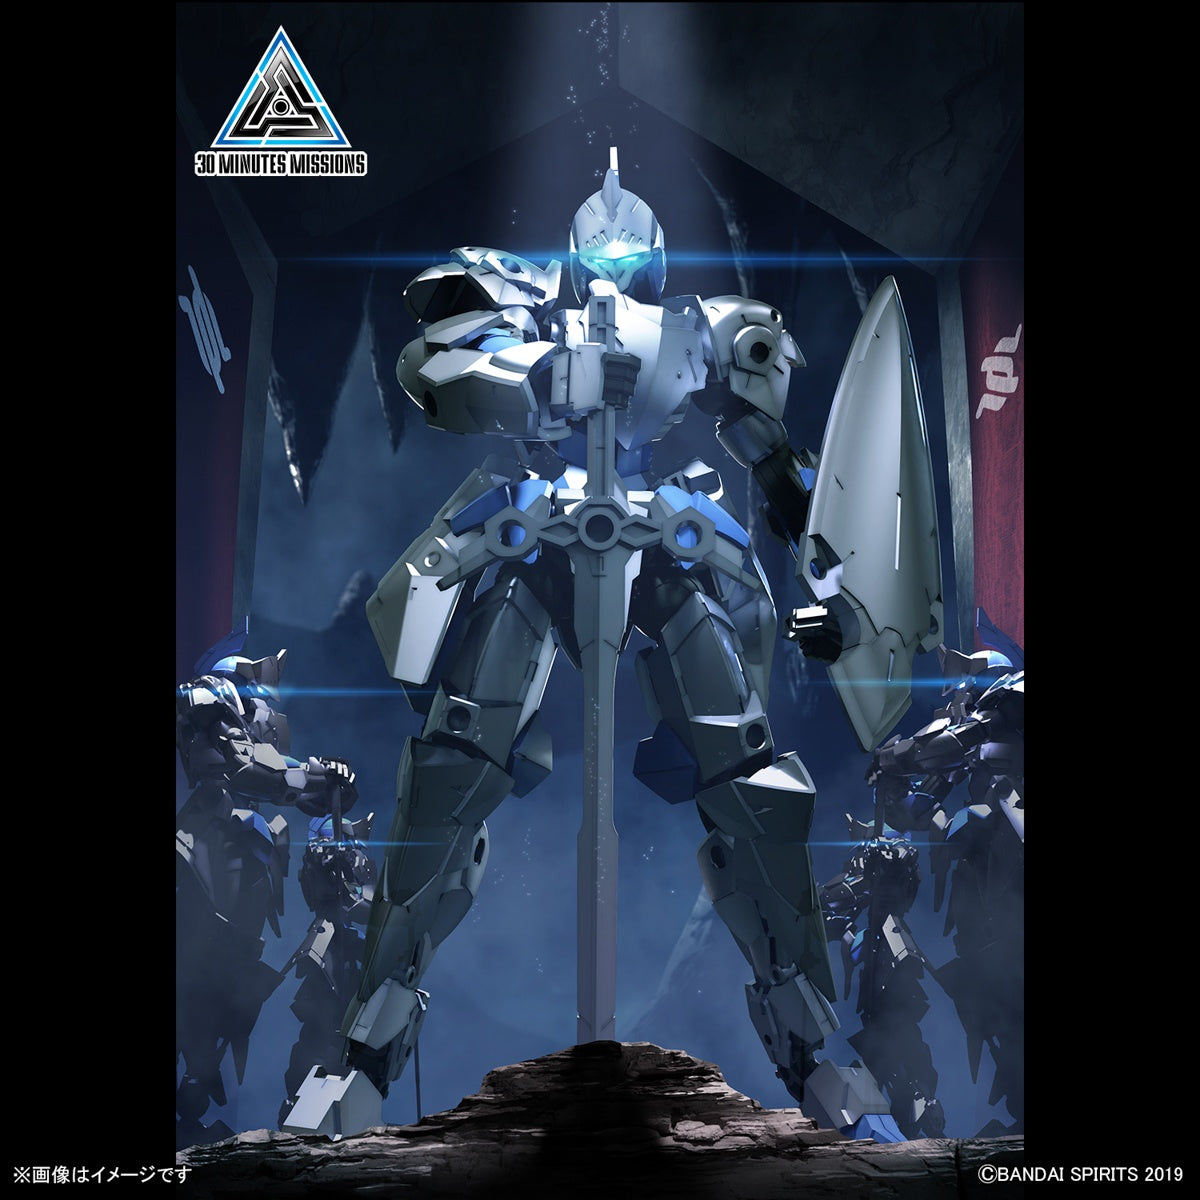 [PRE-ORDER] Gundam 30MM 1/144 Exm-A9K Spinatio (Knight Type)